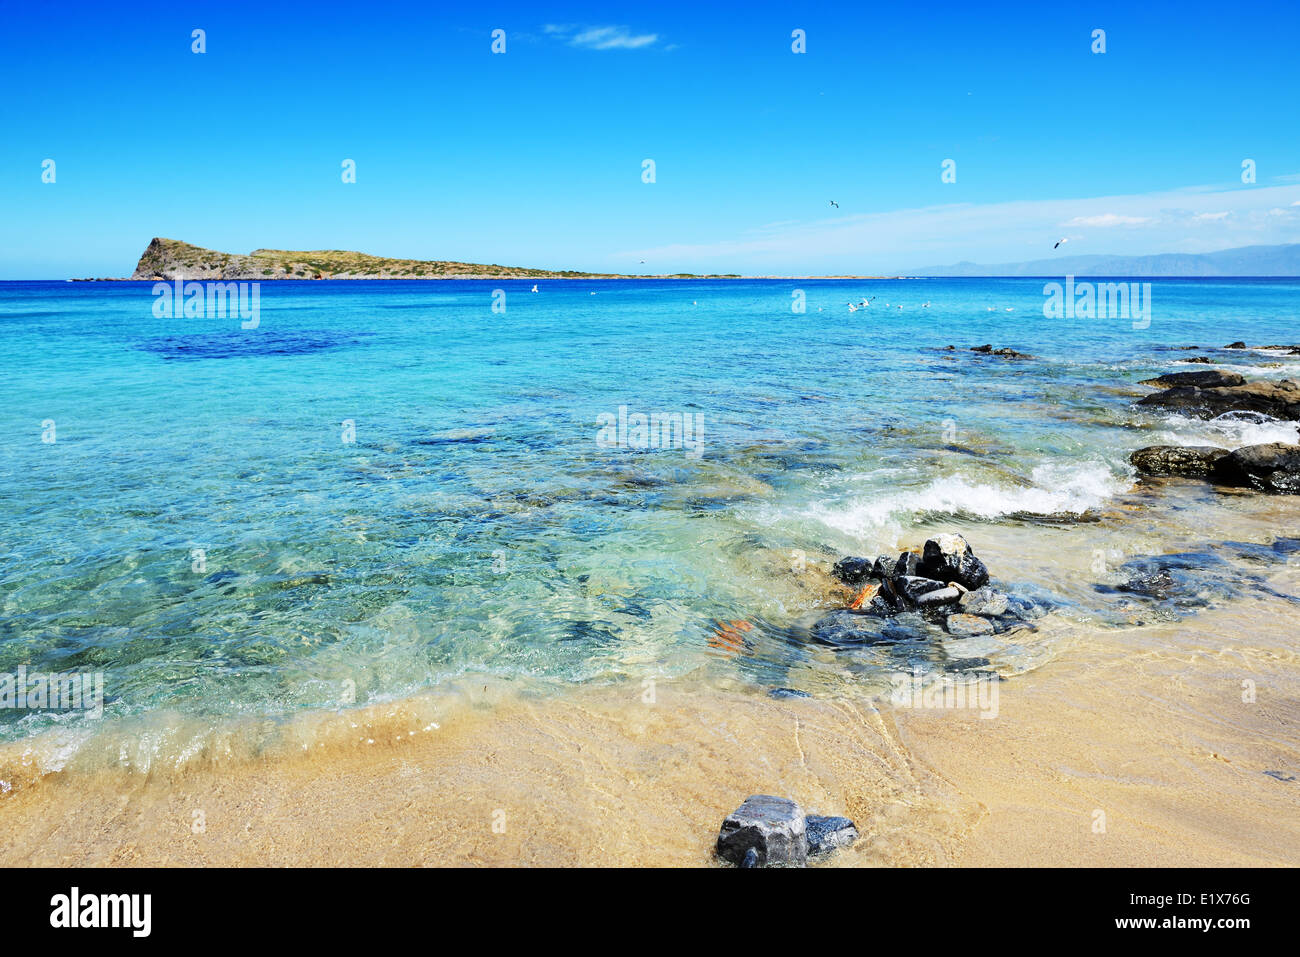 The beach on uninhabited island, Crete, Greece Stock Photo